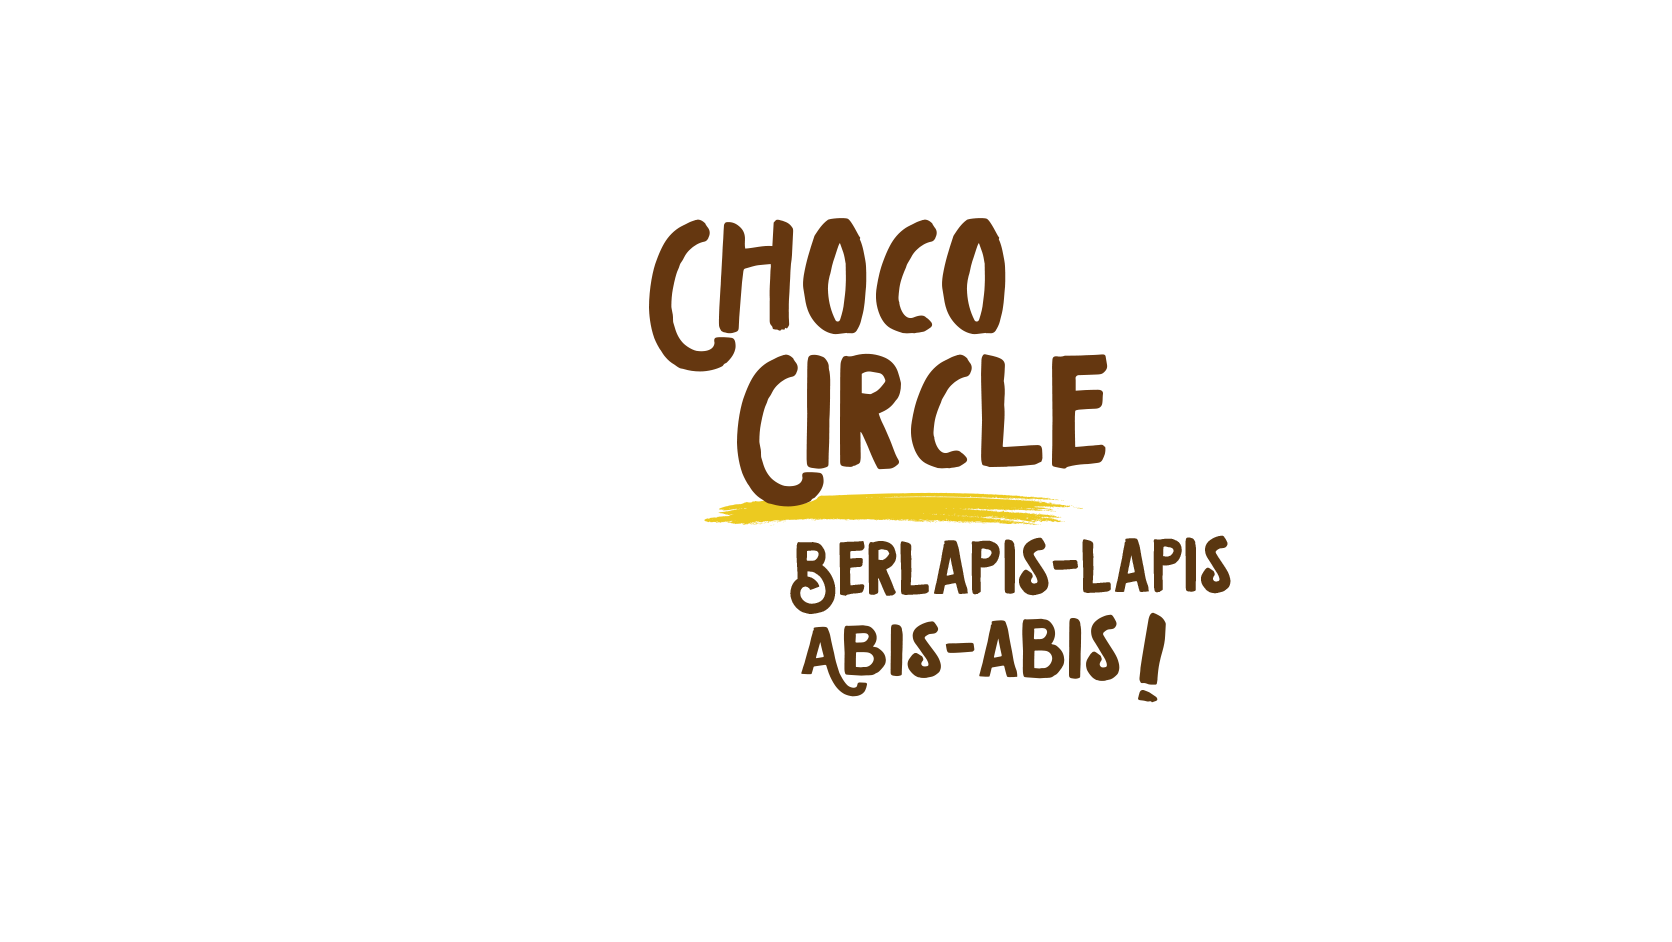 CHOCO CIRCLE